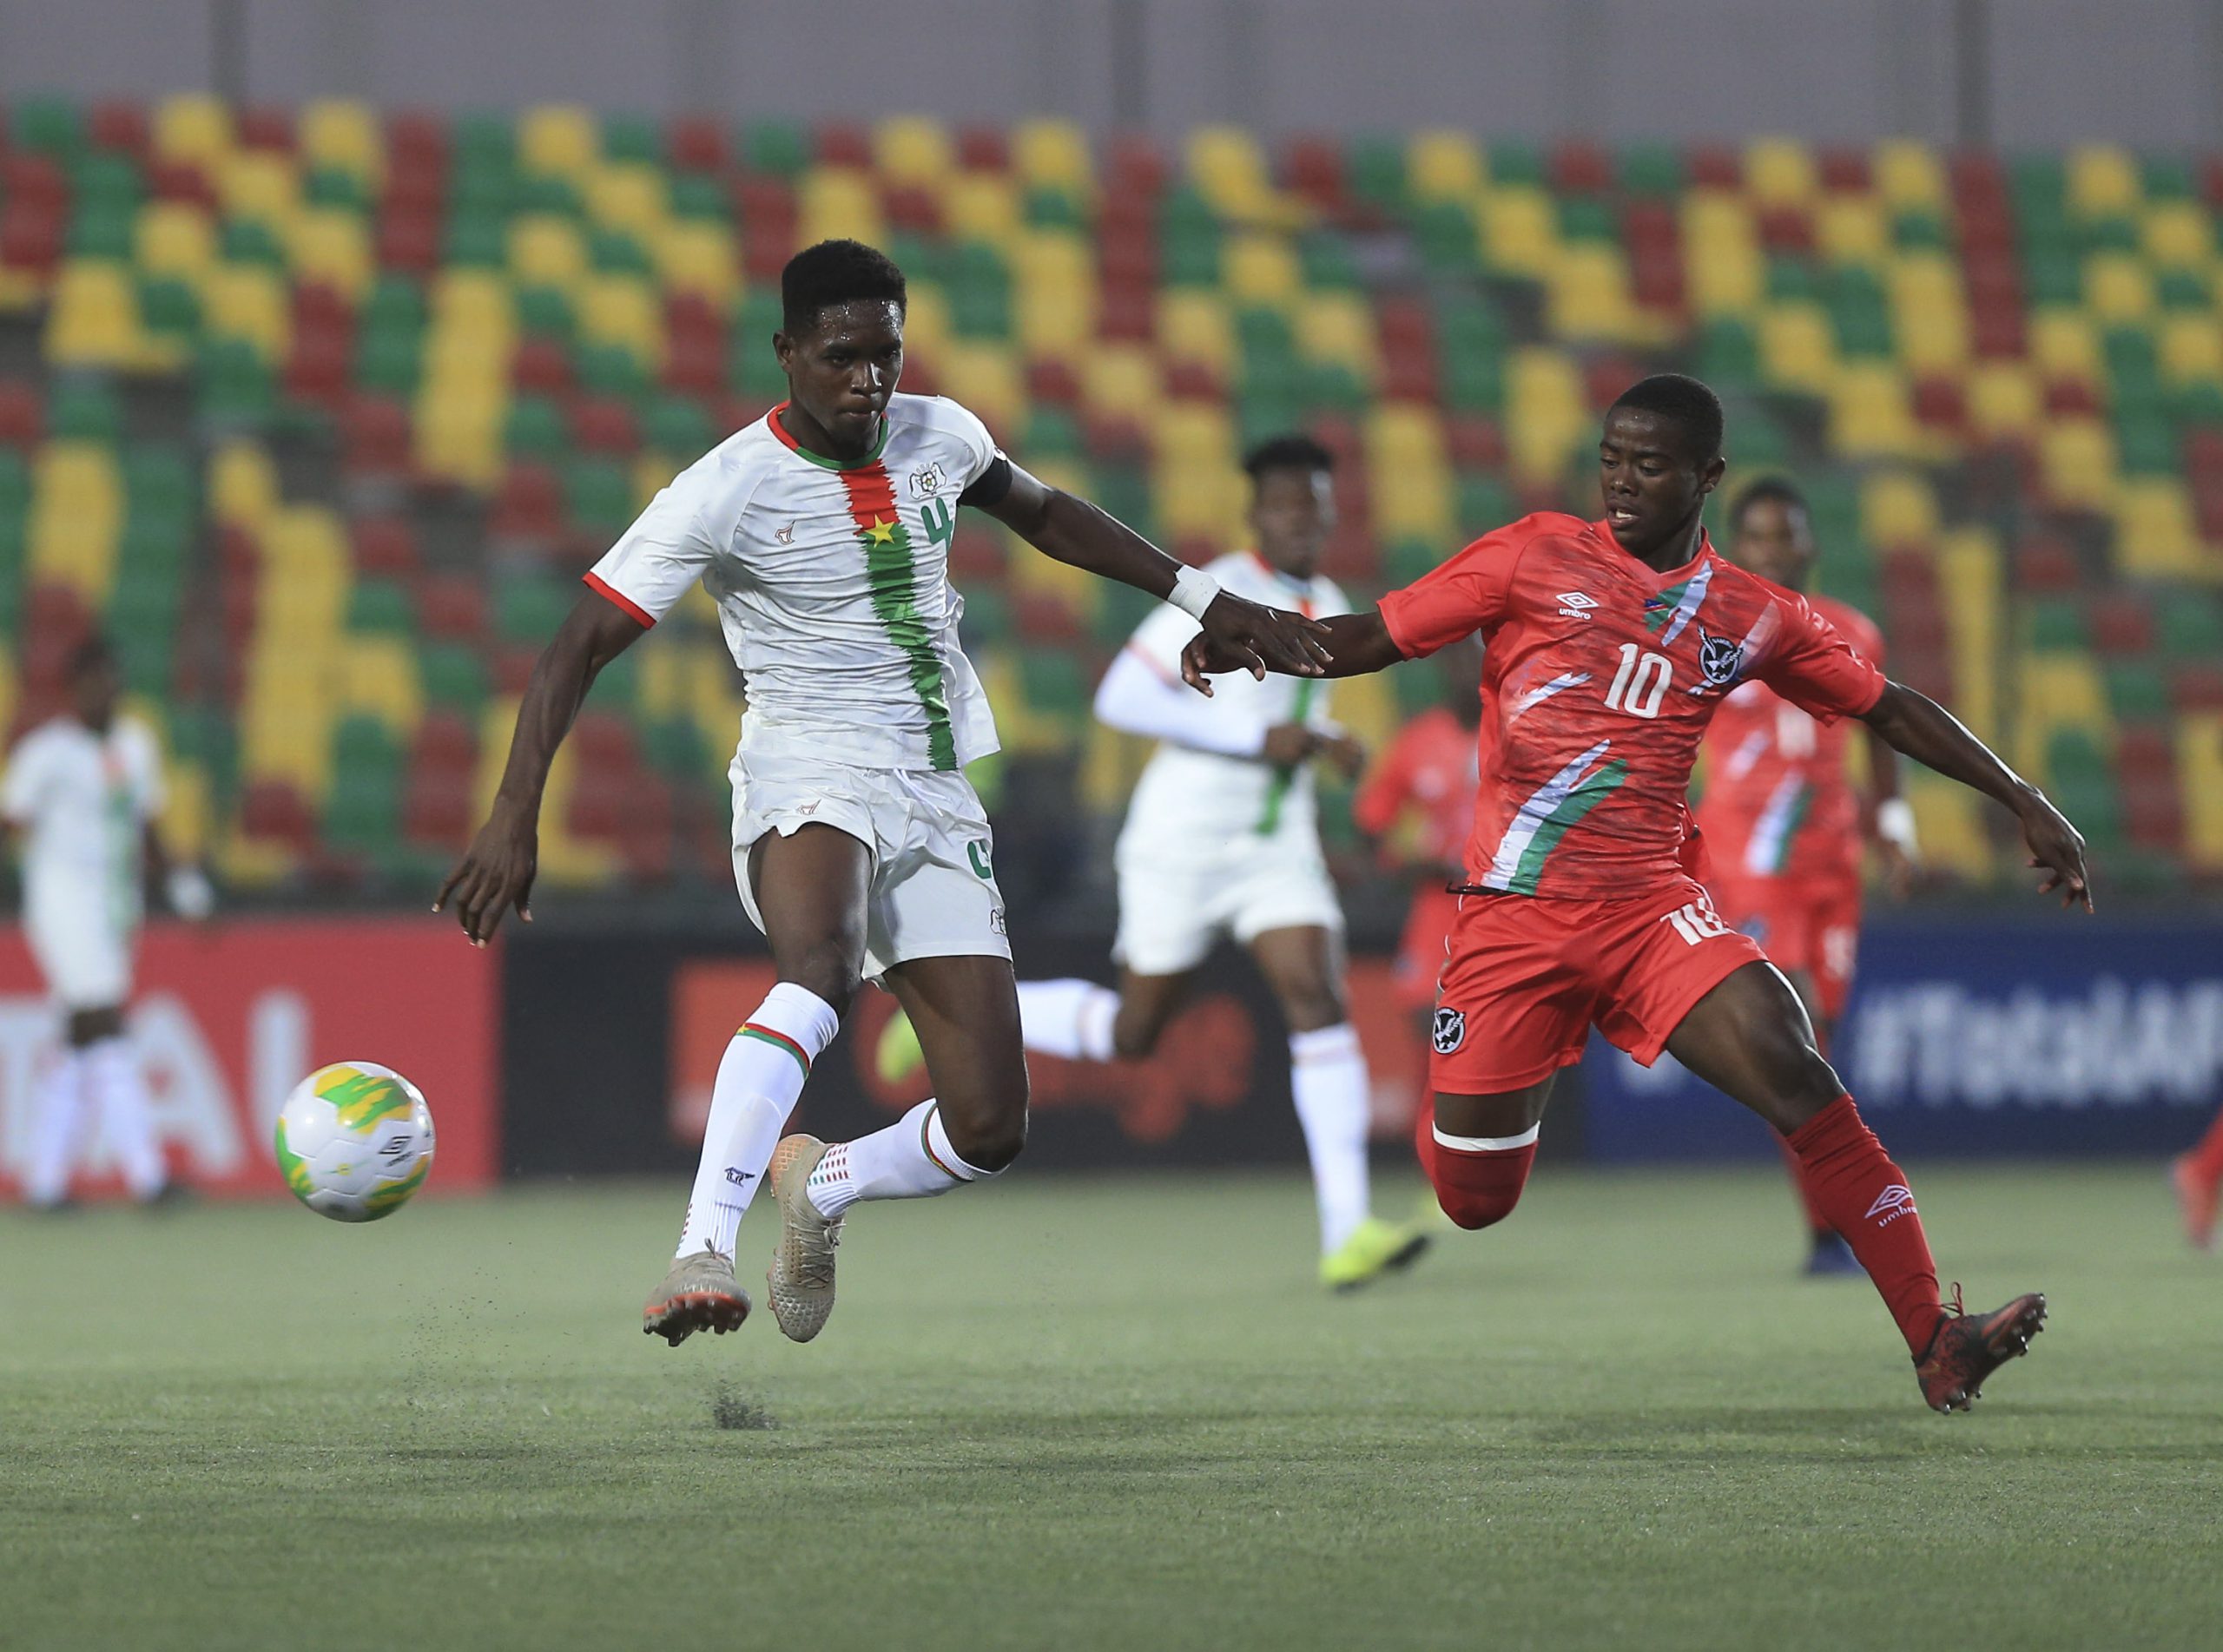 Namibia confirms participation in Cosafa U/20 Cup